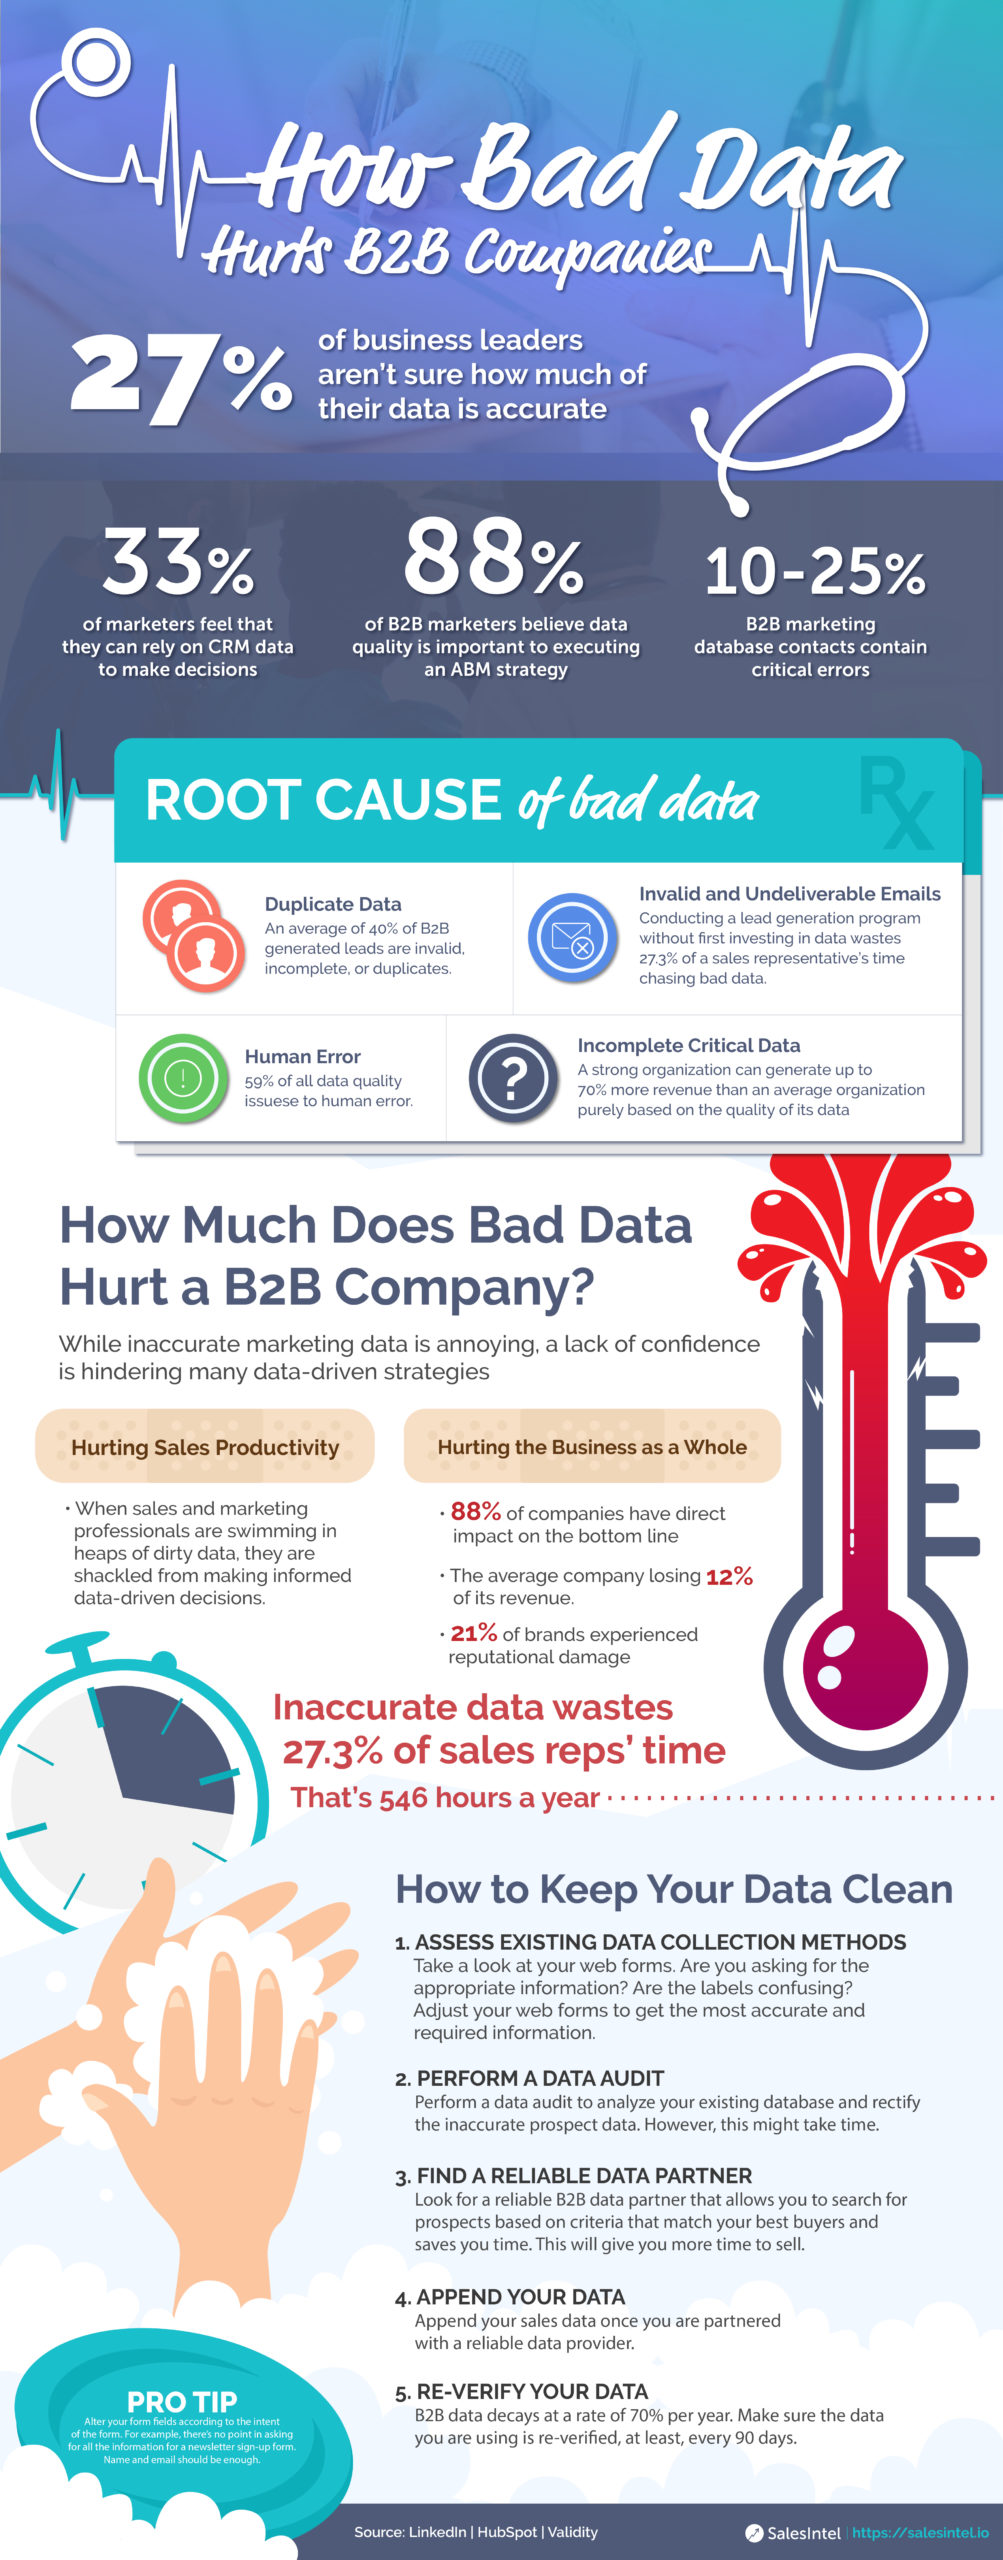 How Bad Data Hurts B2B Companies - V2